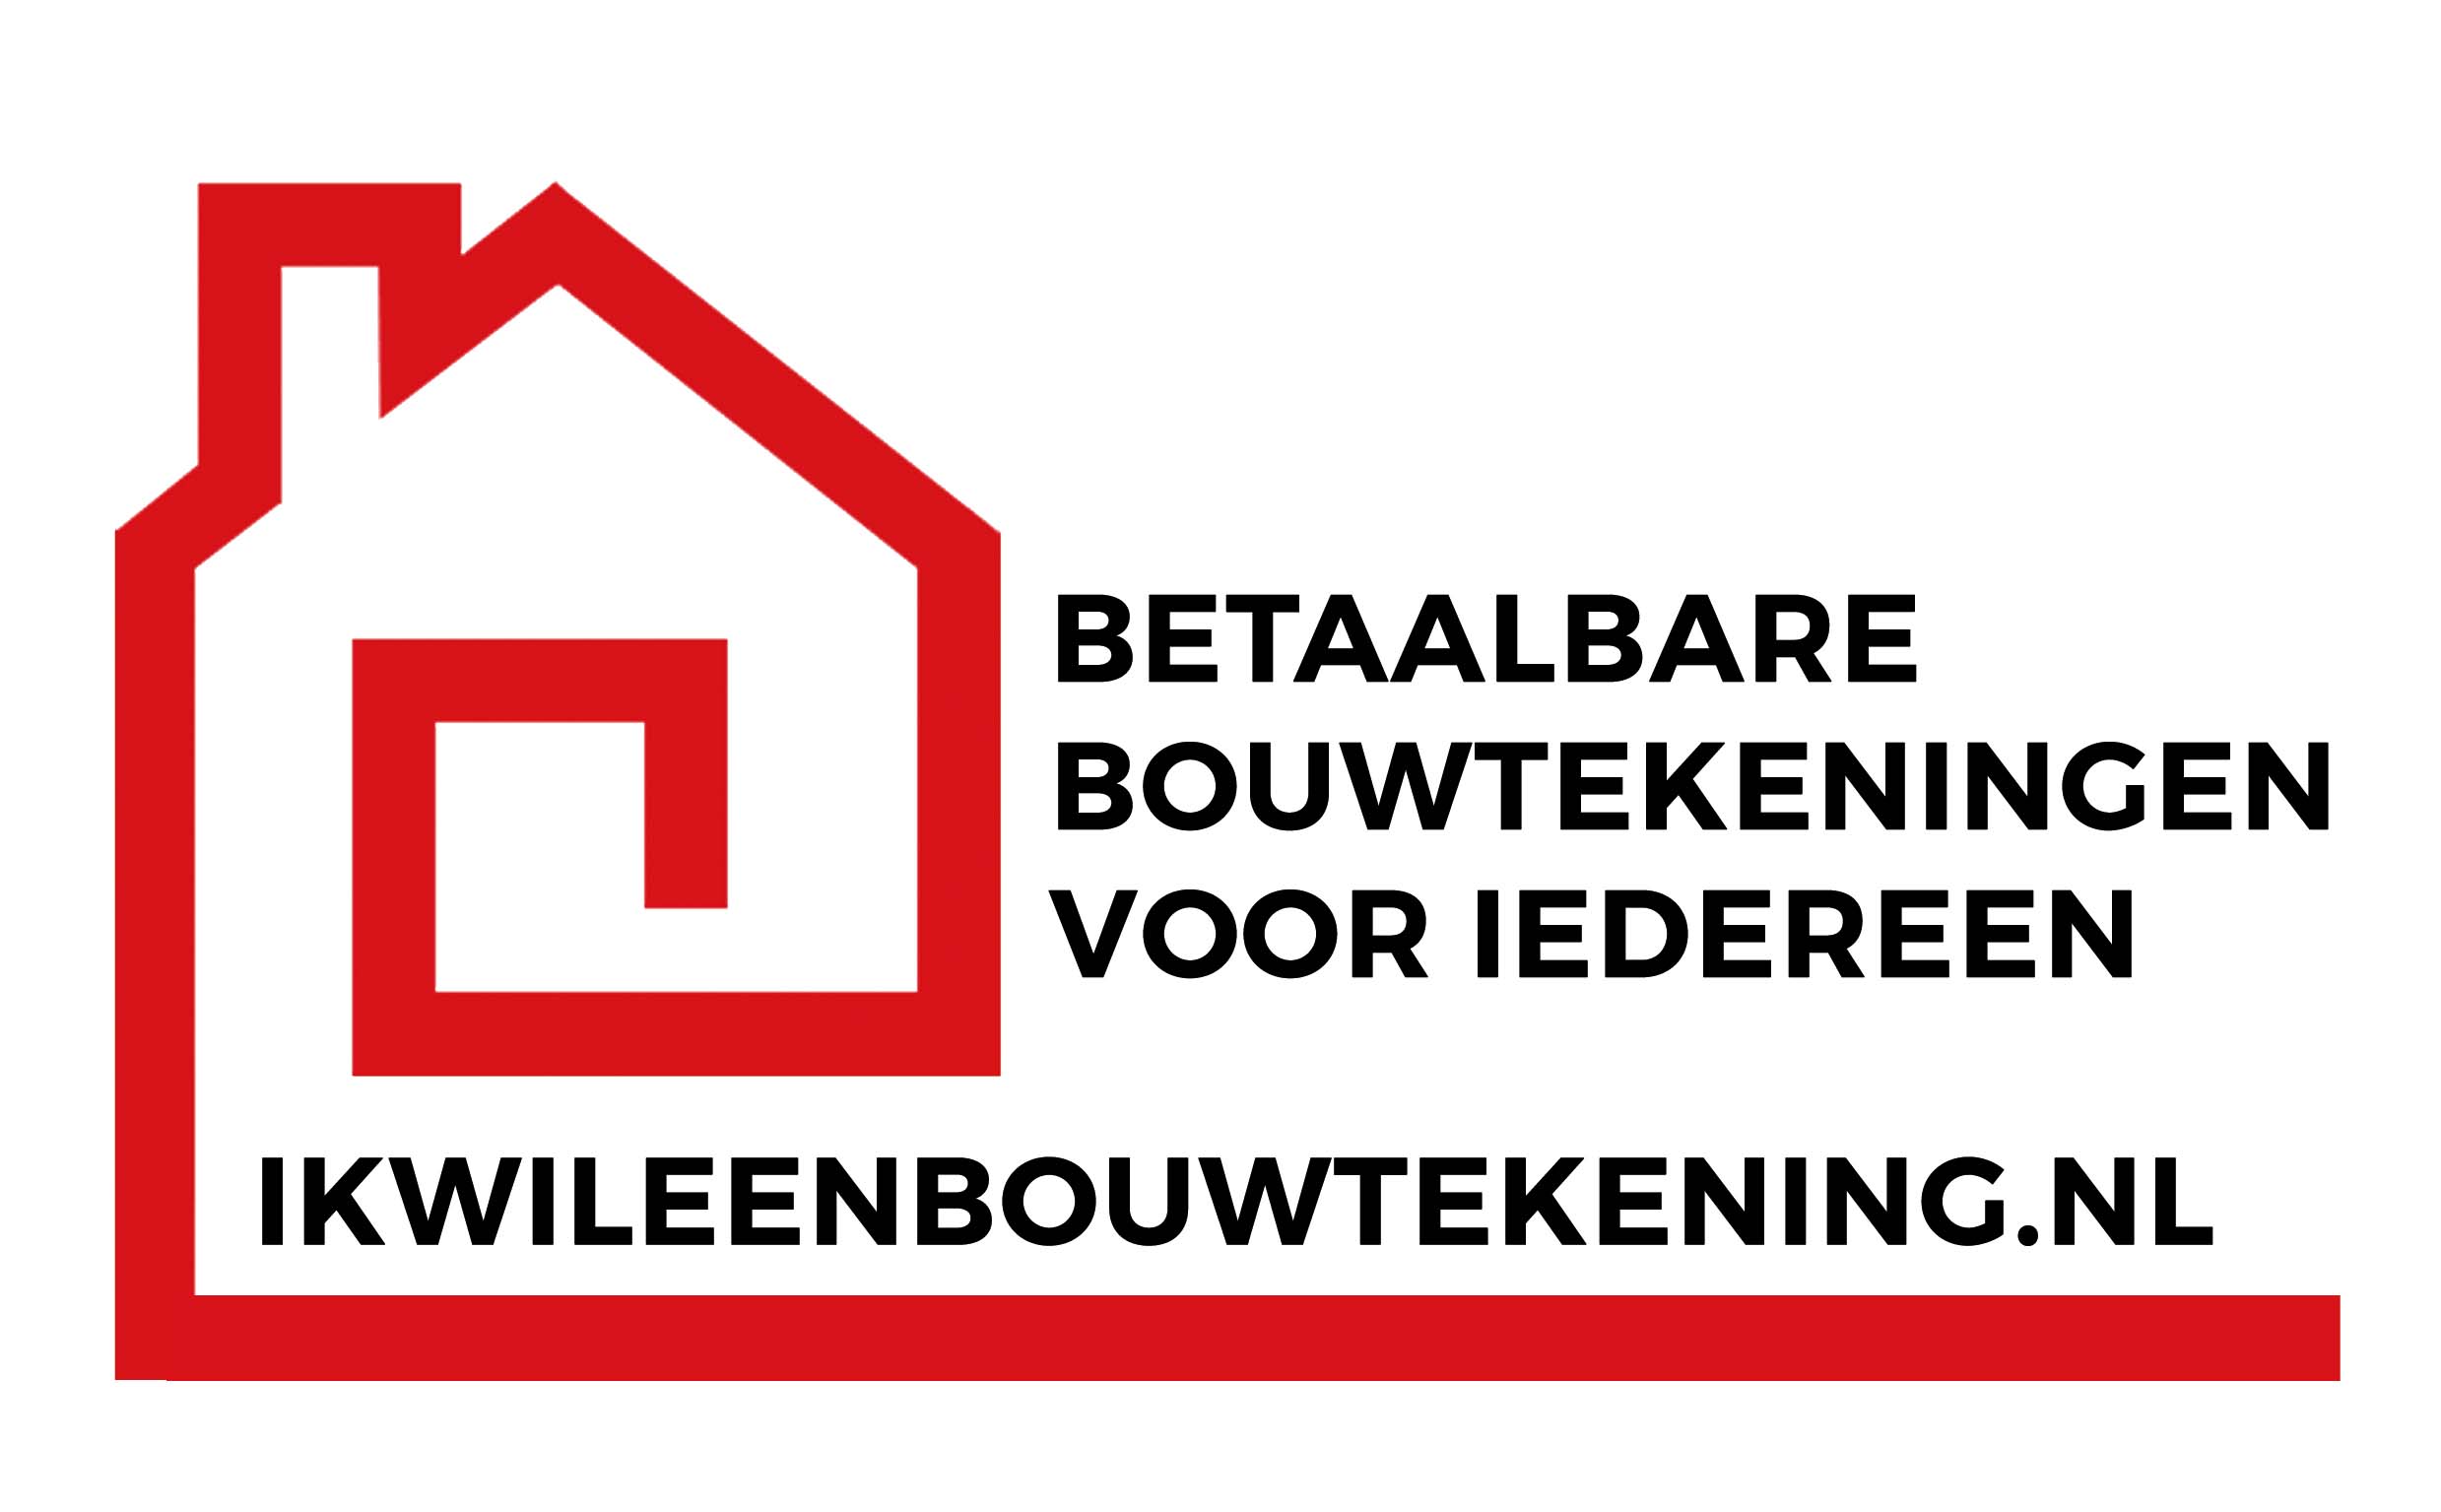 ikwileenbouwtekening.nl